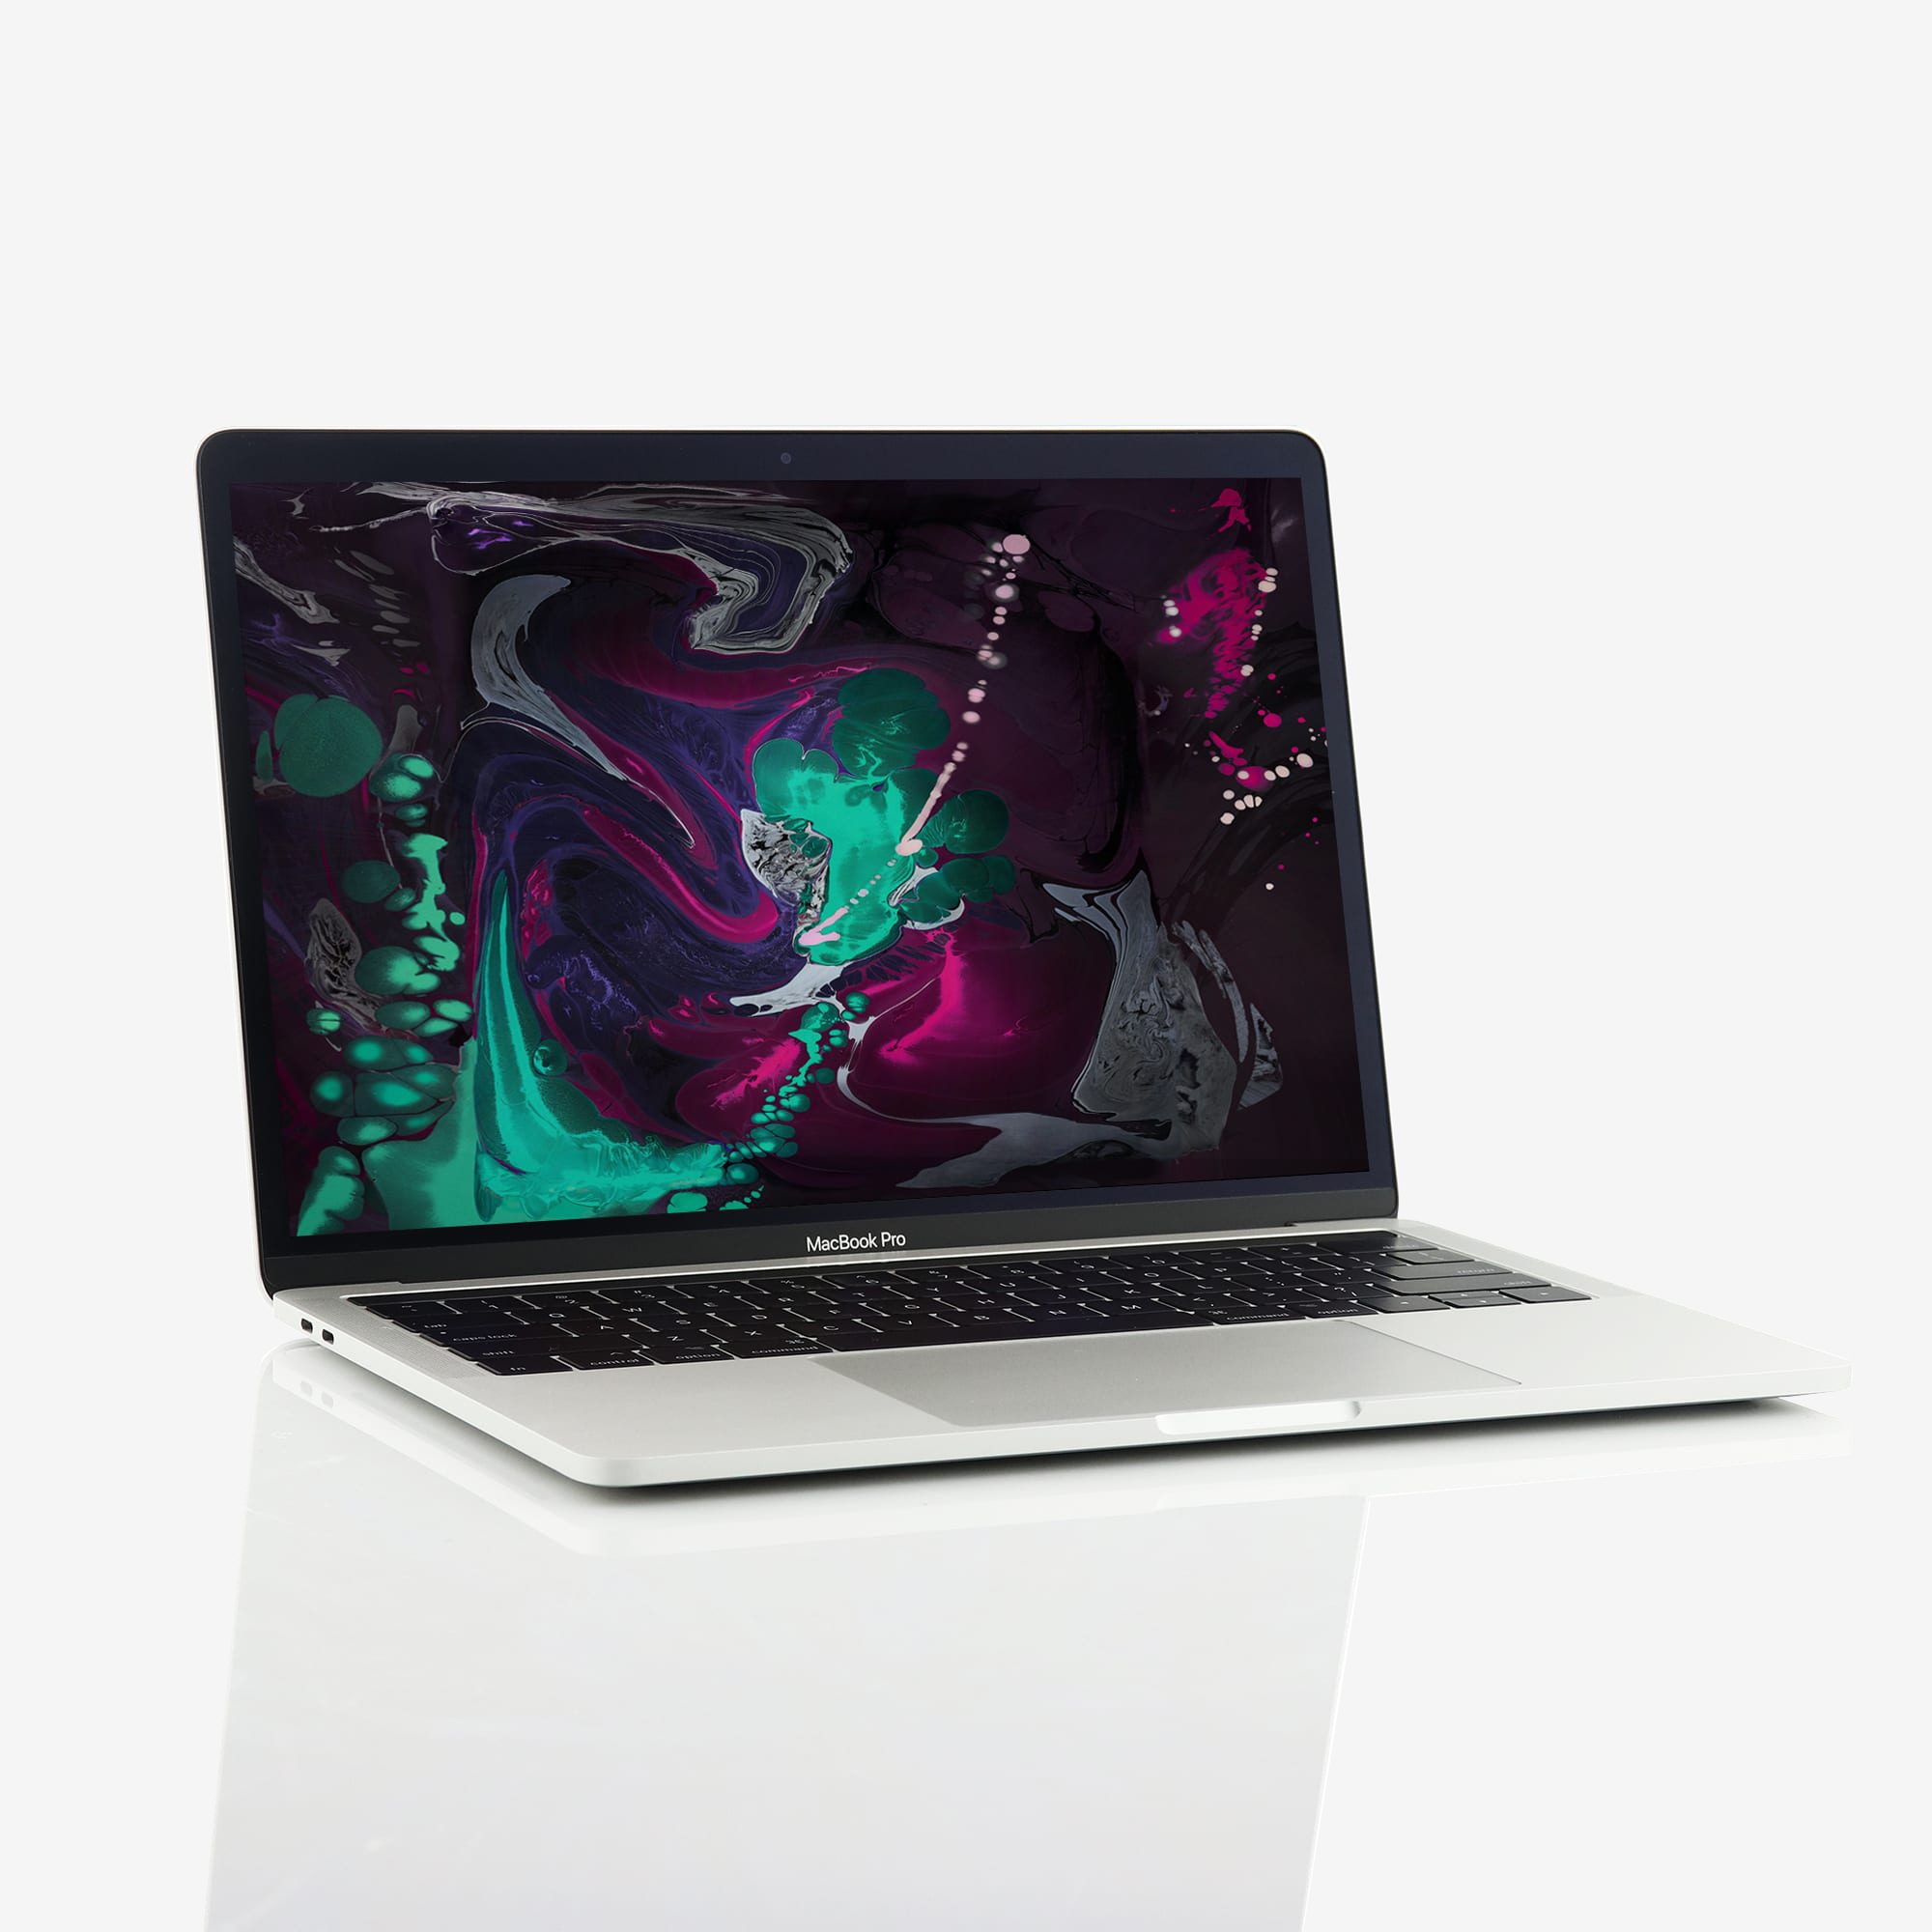 1 x Apple MacBook Pro Retina 13 Inch Touchbar Intel Core i5 2.90 GHz (2016)